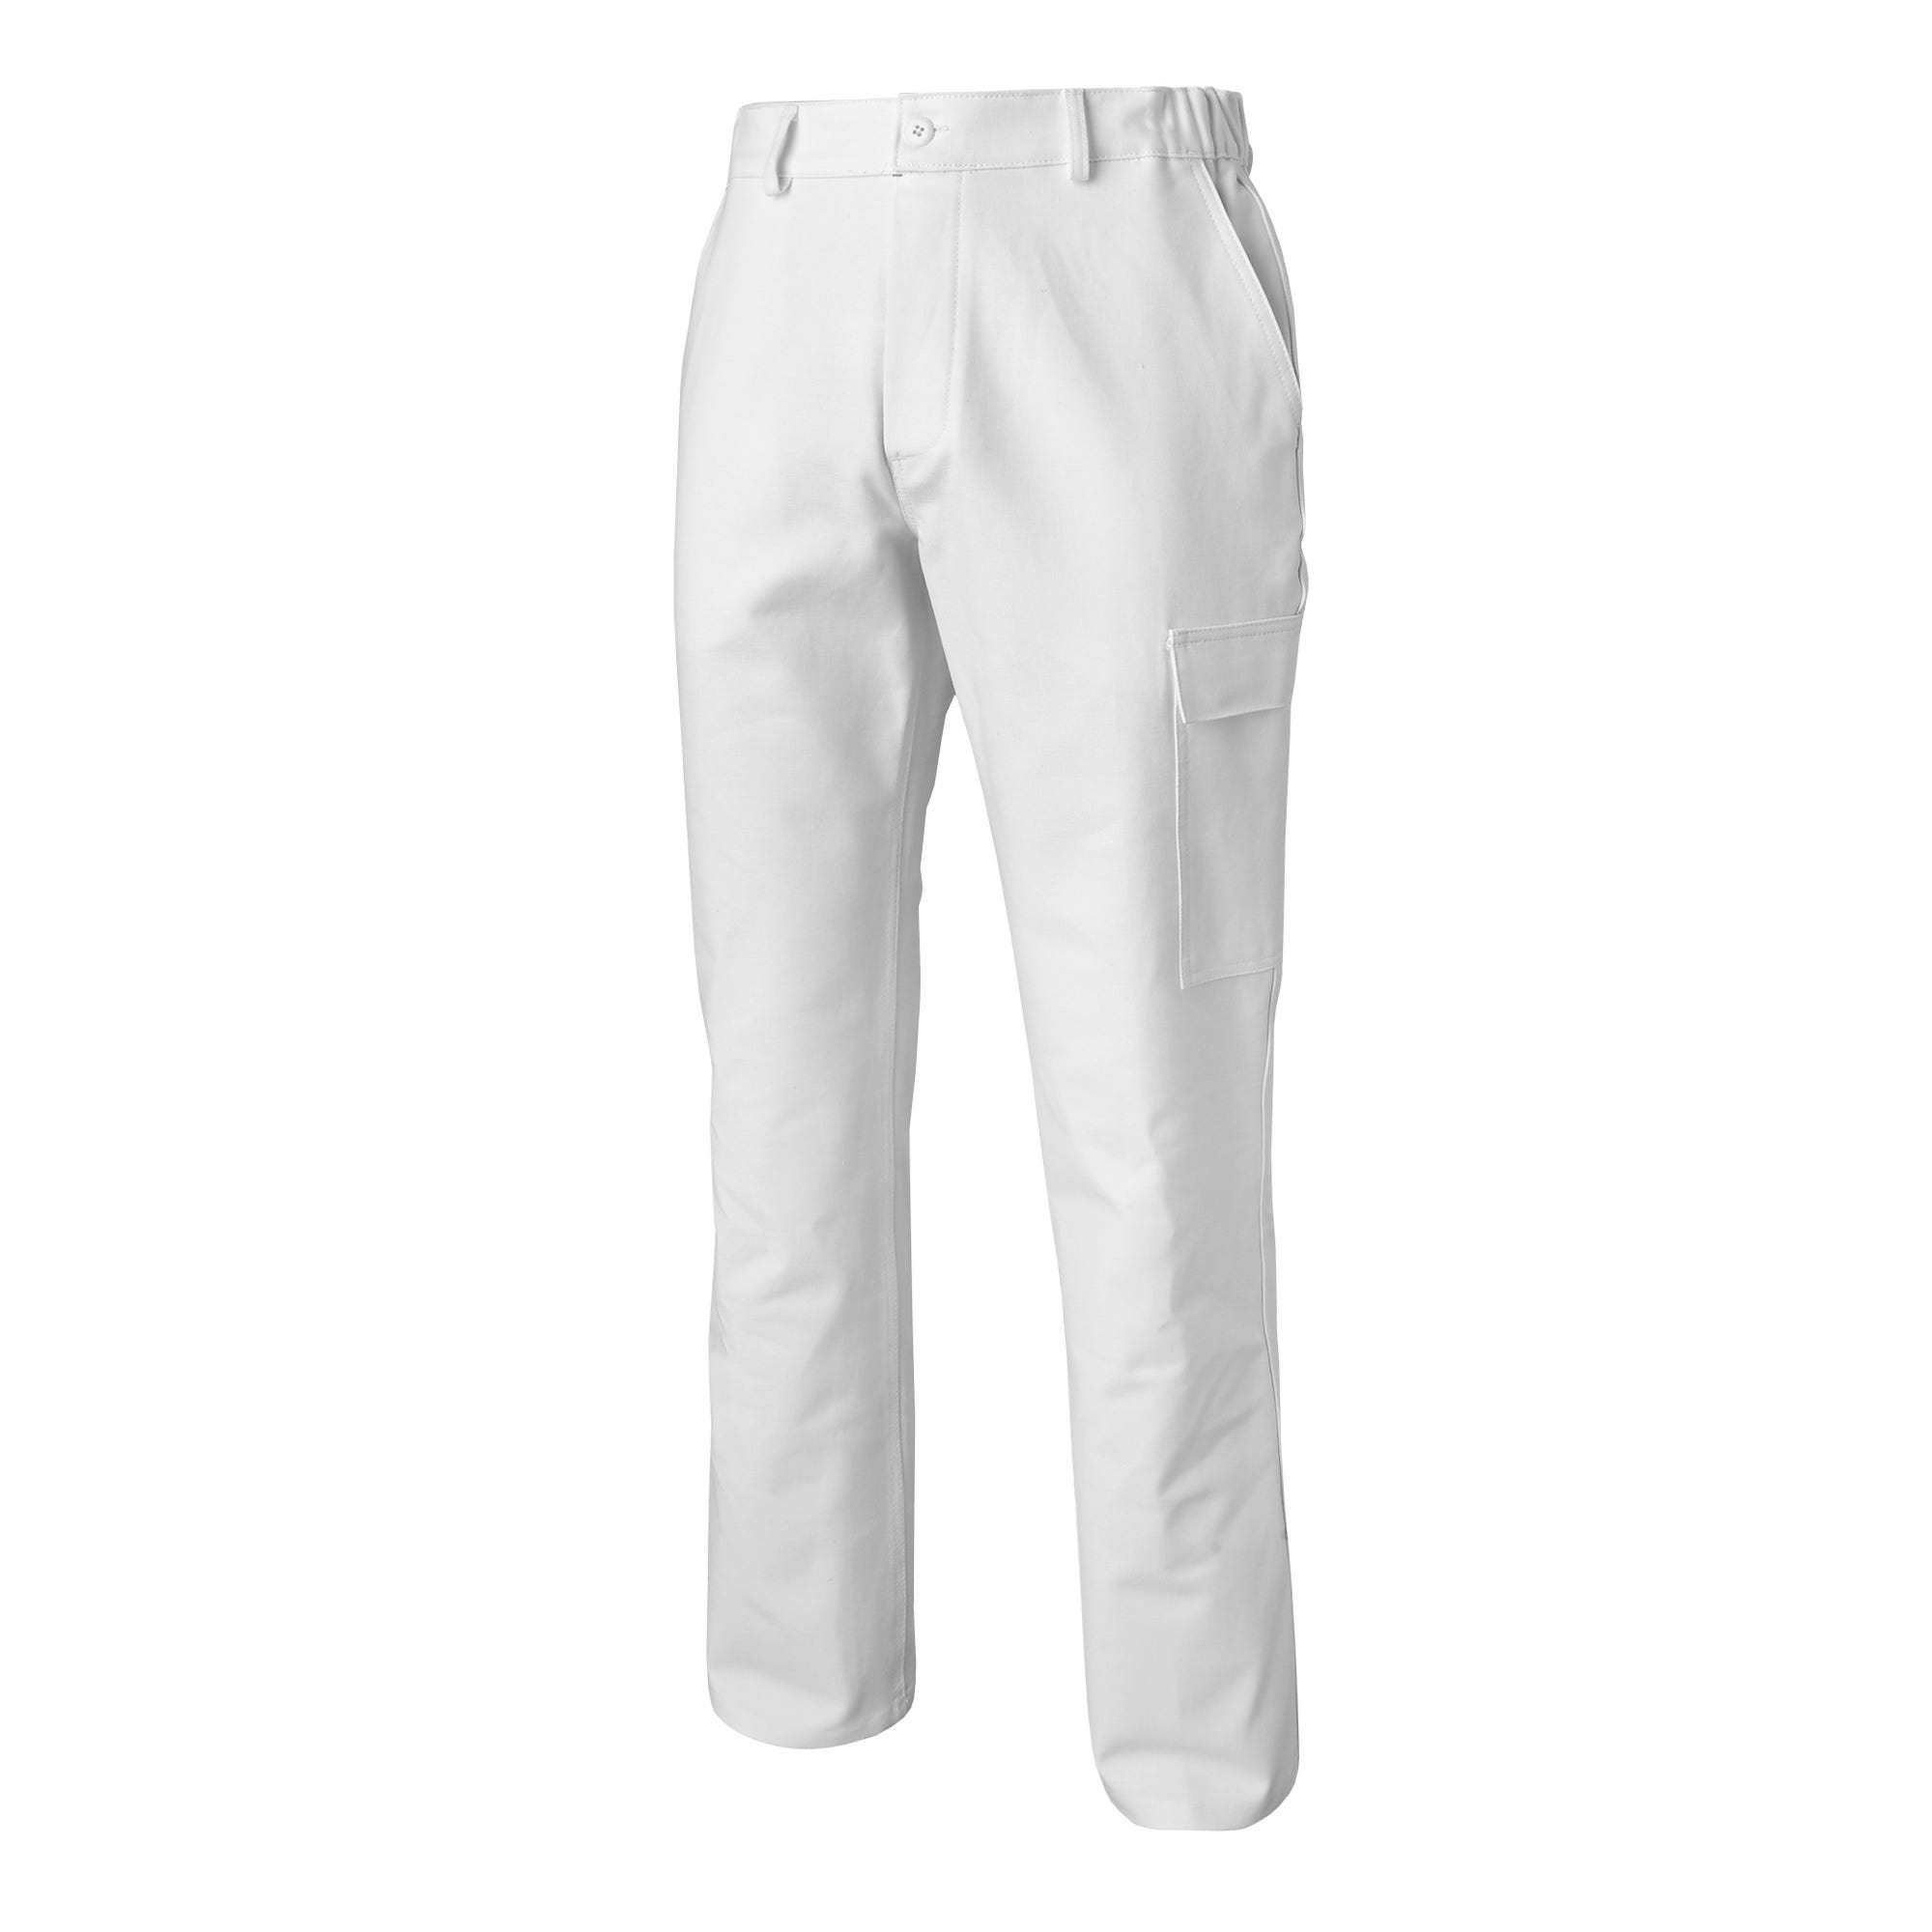 Pantalon de travail Blanc T.5 New pilote - MOLINEL 0